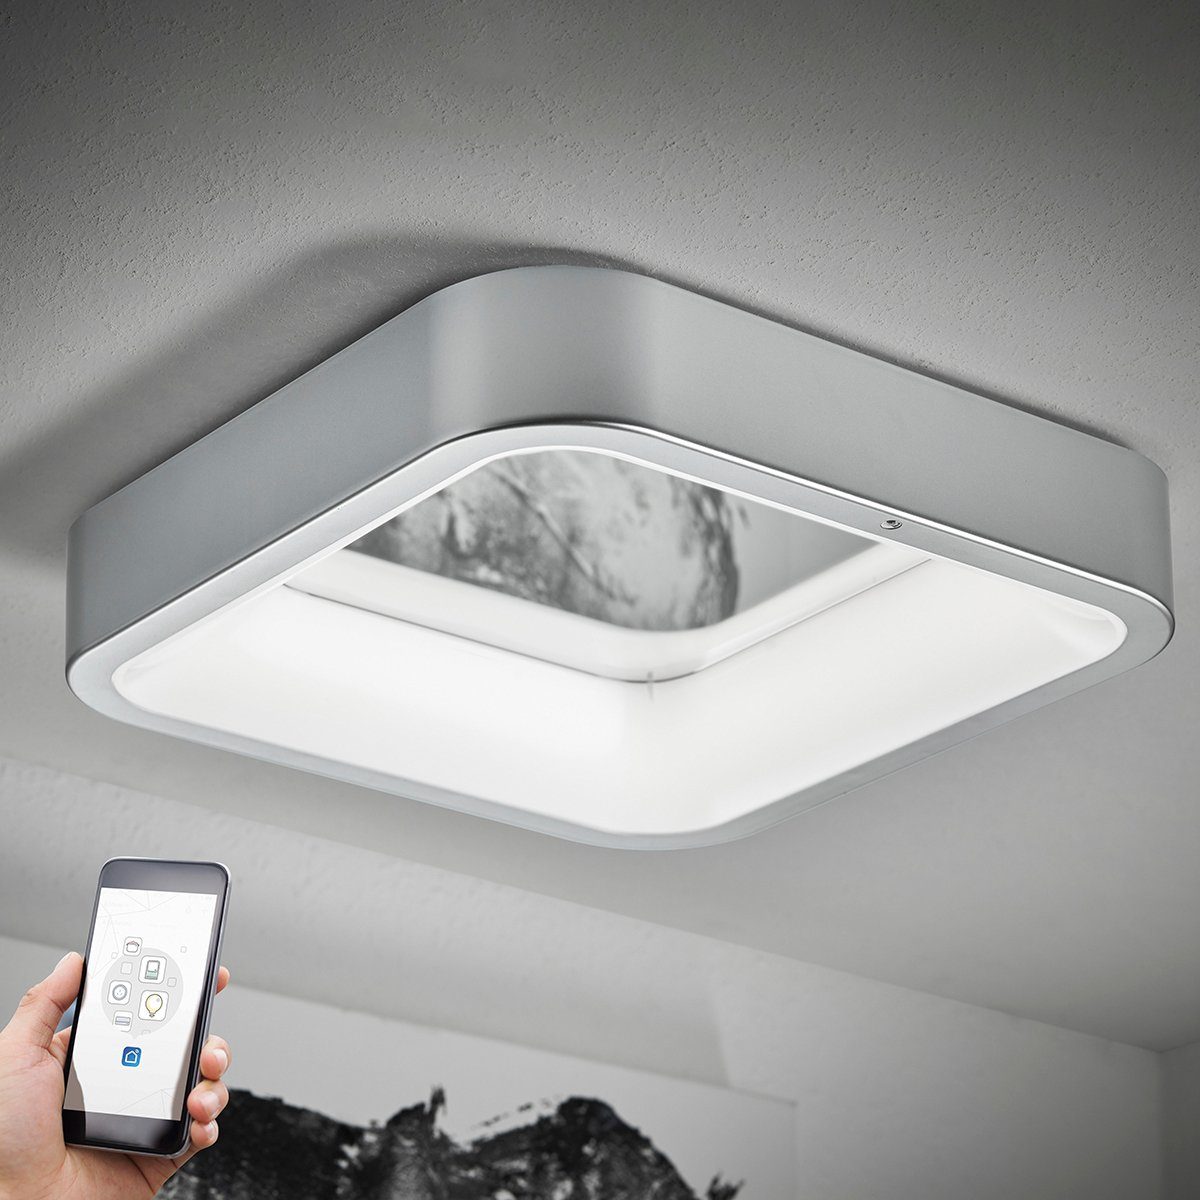 MeLiTec LED Deckenleuchte D111 Smart Home, LED fest integriert, warmweiß - kaltweiß, LED Leuchte Smart Home Deckenleuchte Wandlampe chrom-matt 35x35x8 cm | Deckenlampen